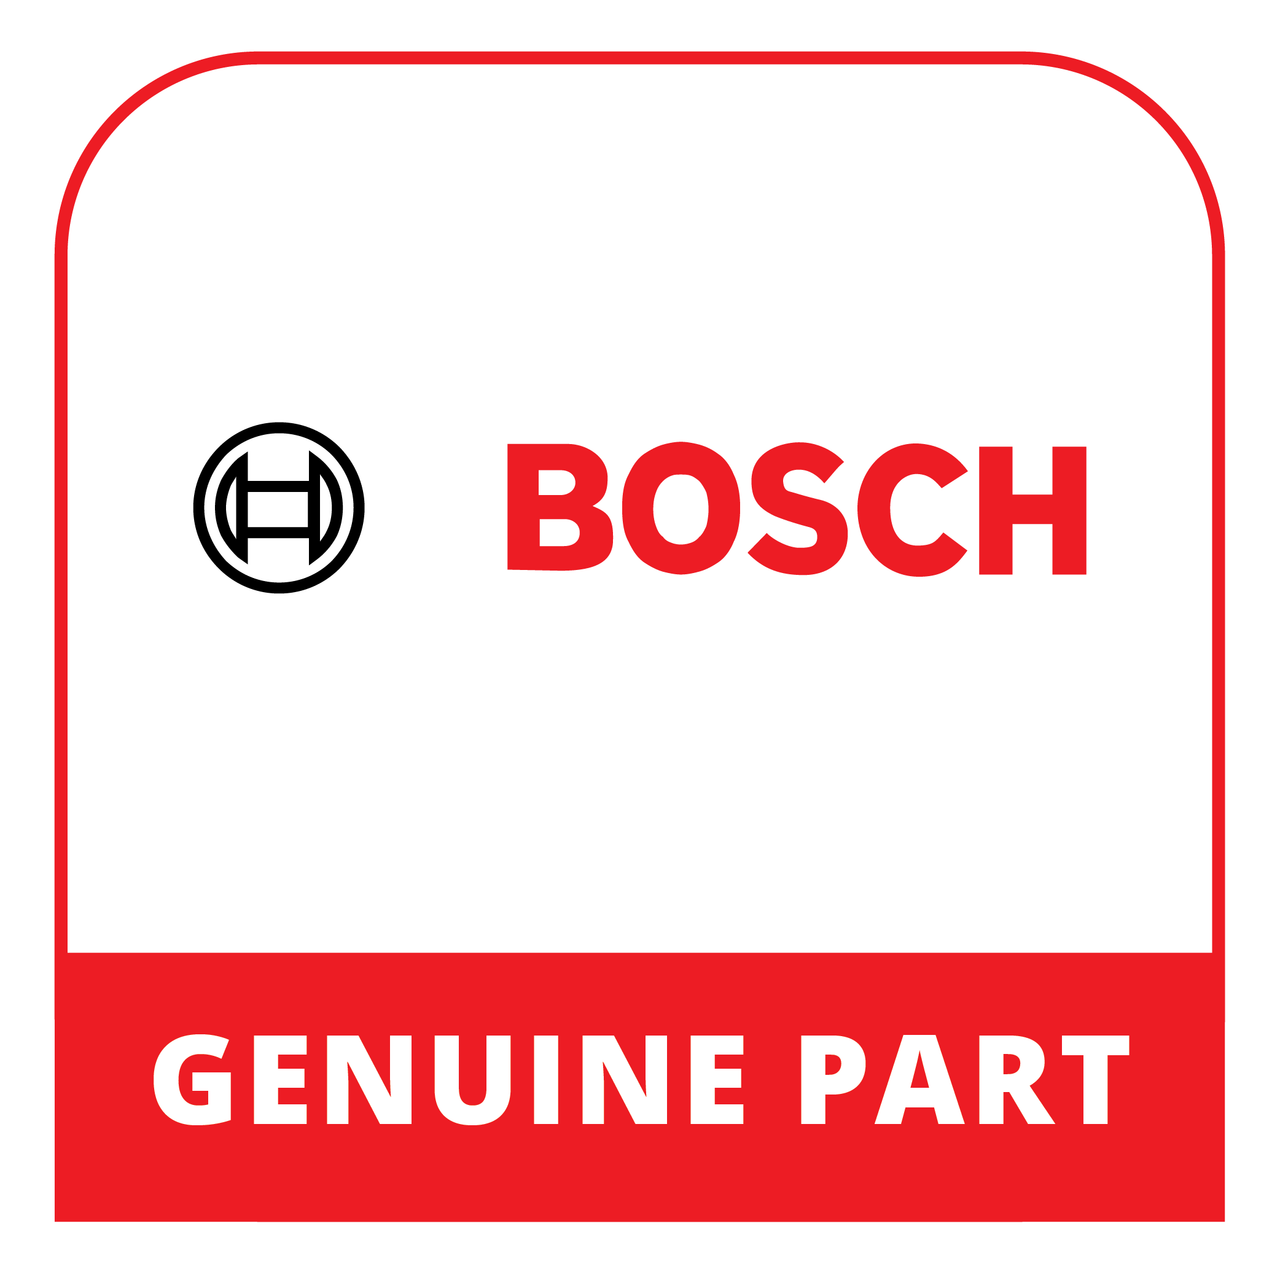 Bosch (Thermador) 20003948 - Glass Ceramic Hob Top - Genuine Bosch (Thermador) Part